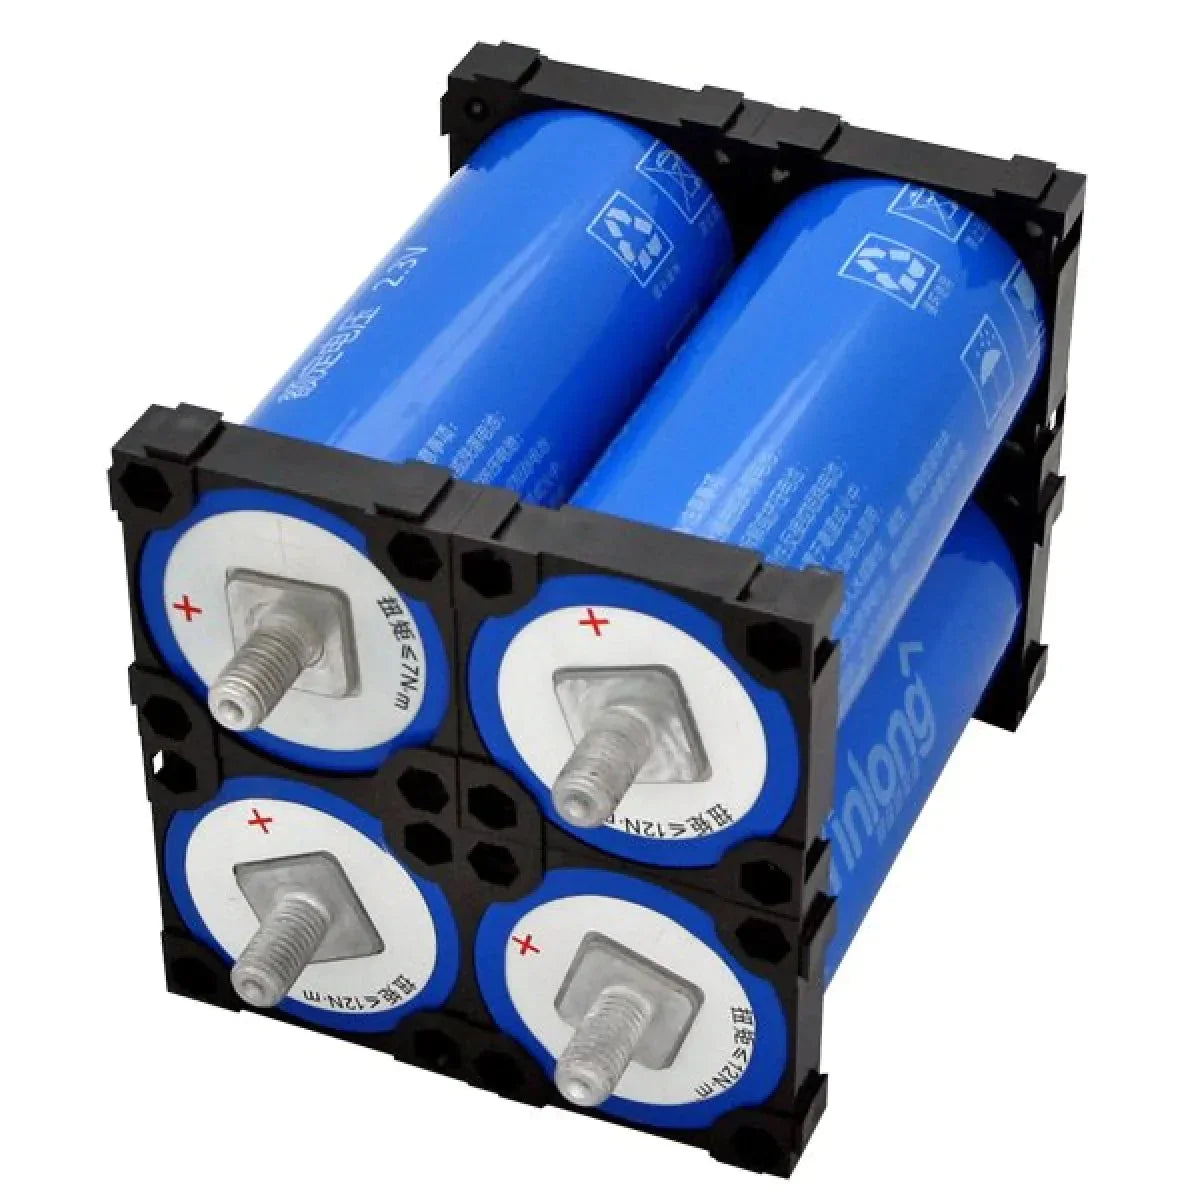 Aluminium Autobatterie befestigen Halterung Halter Batterie Zurrgurt Kit  190mm rot blau schwarz silber gold grün lila - AliExpress